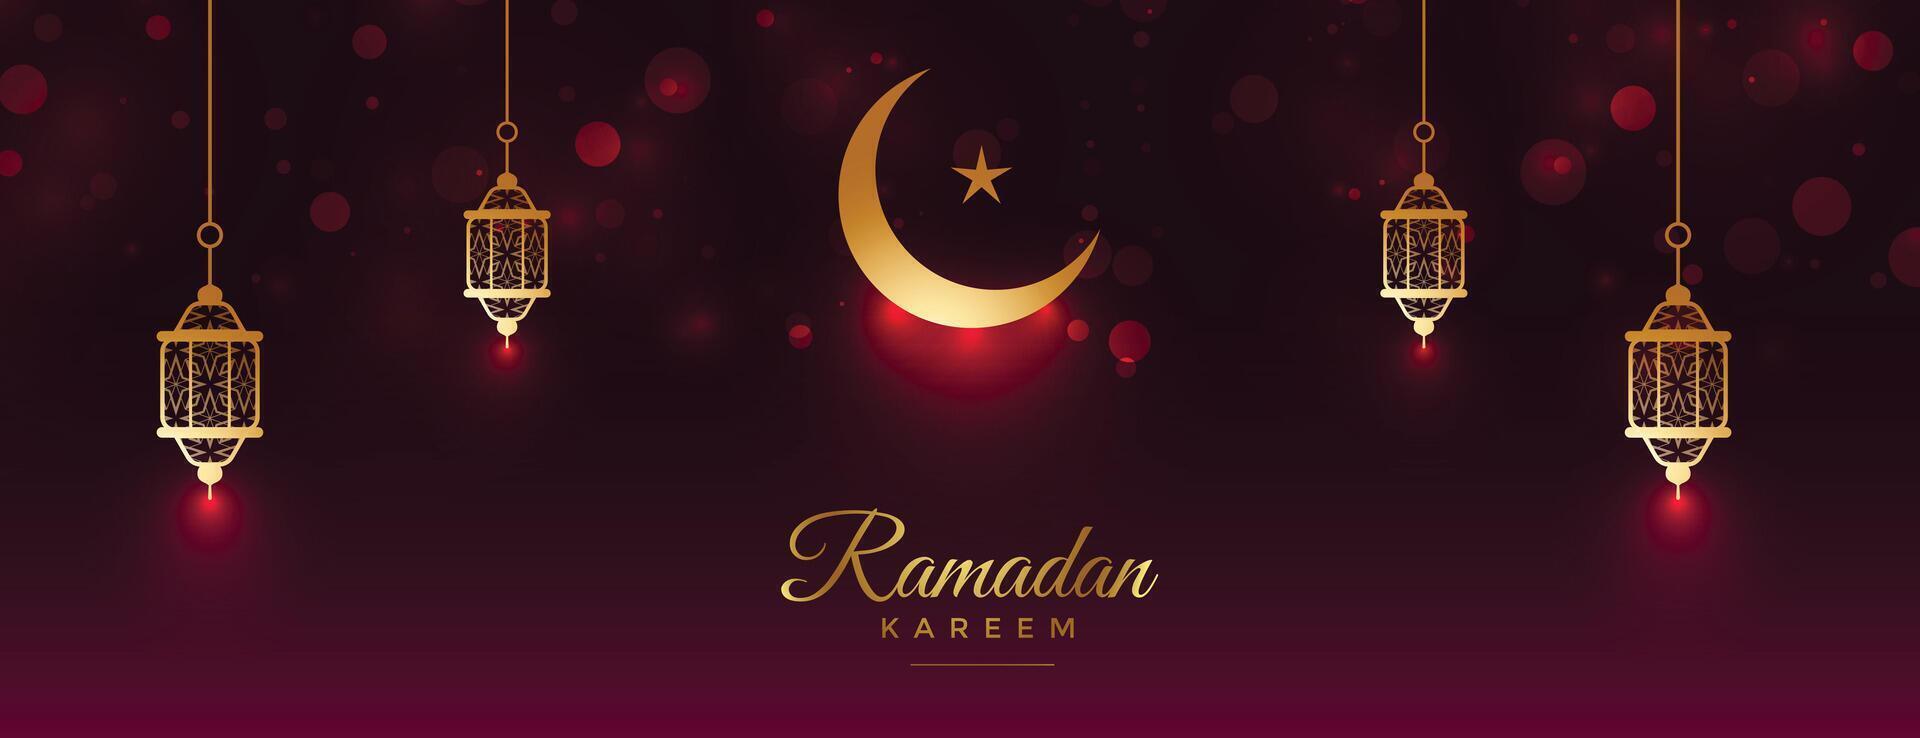 realistic eid mubarak and ramadan kareem banner design vector